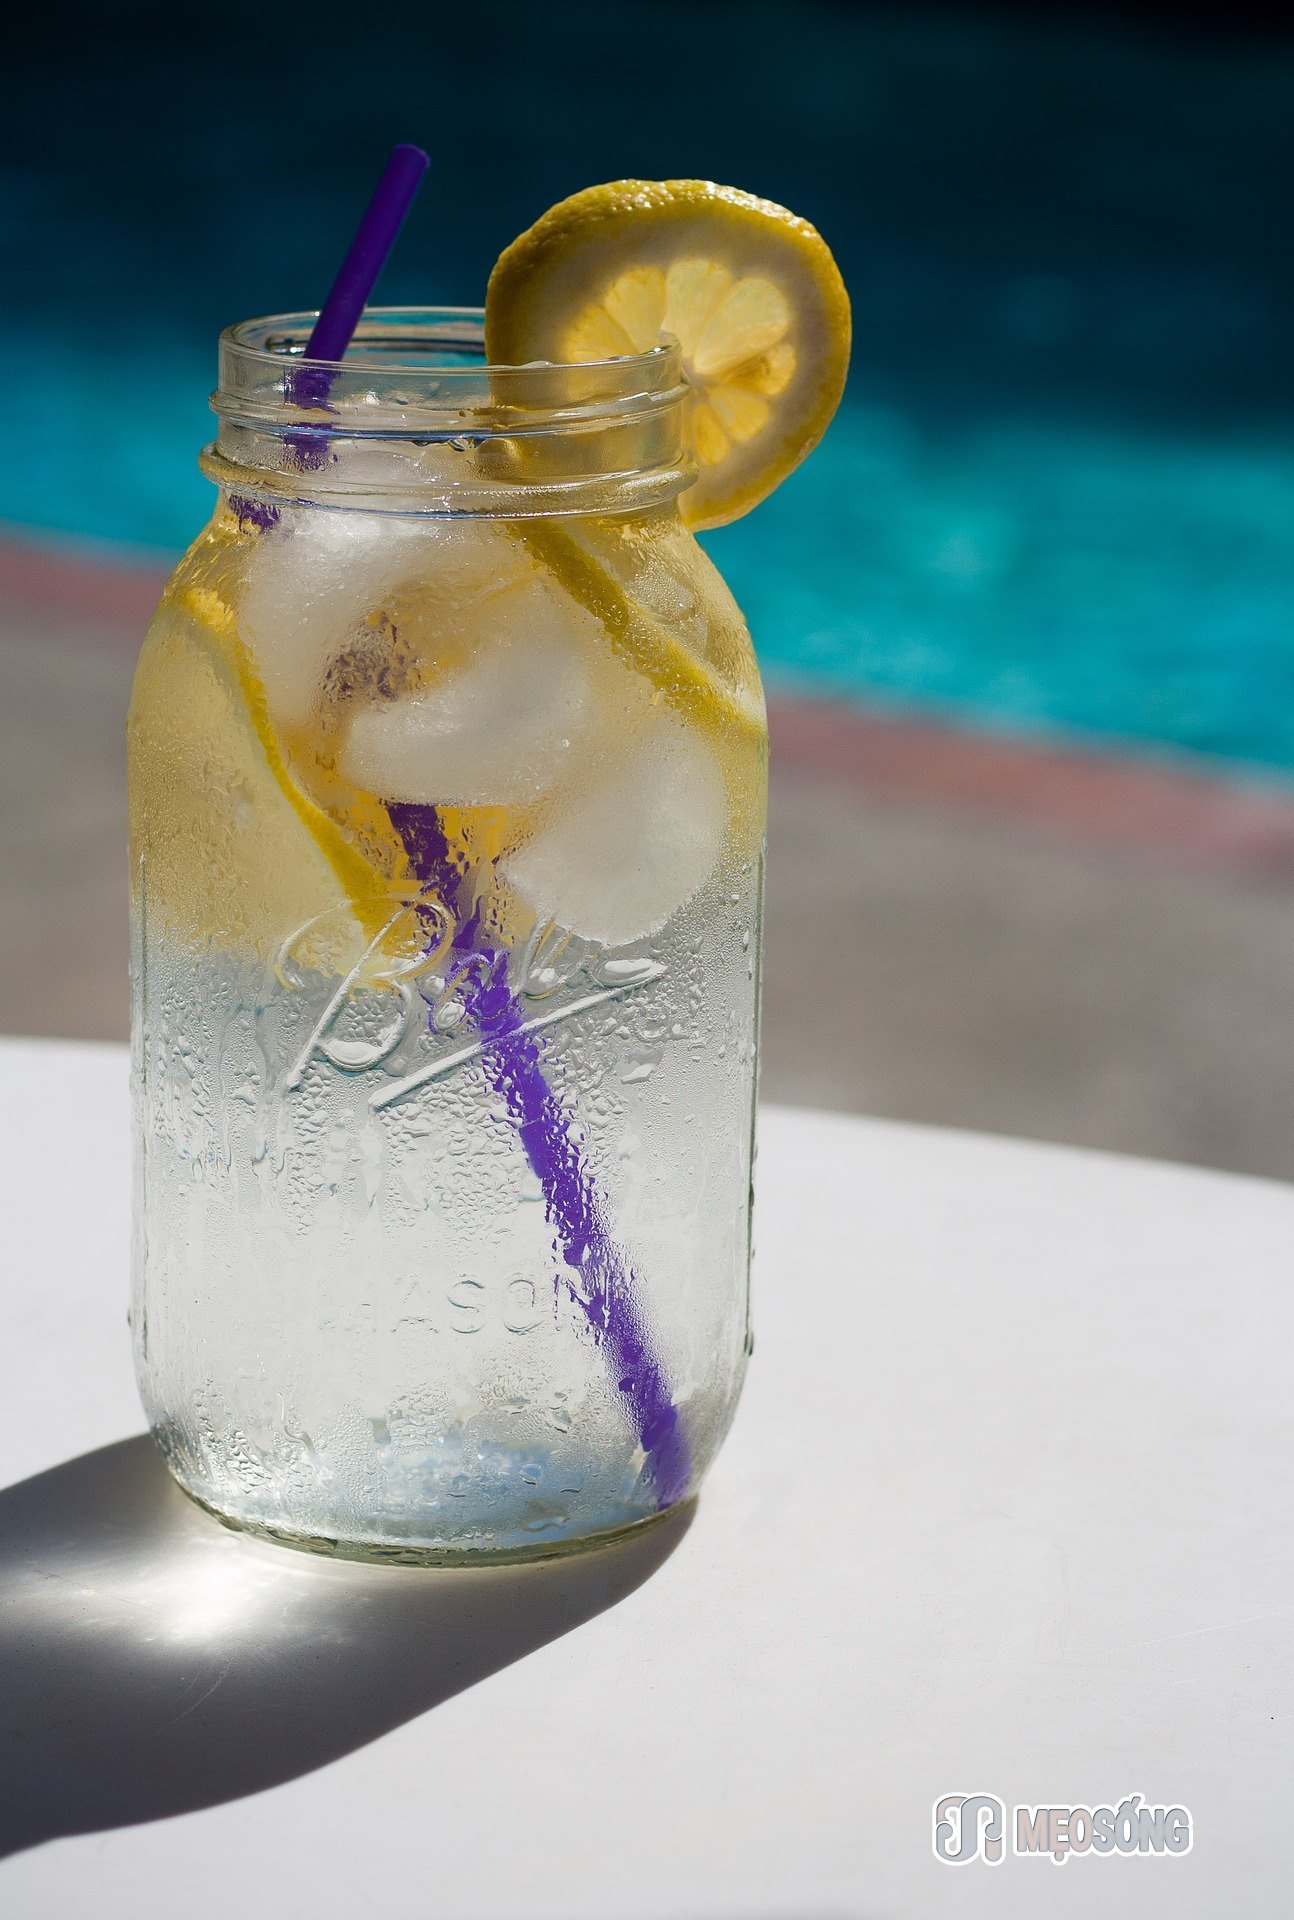 Lemon water - great for detox